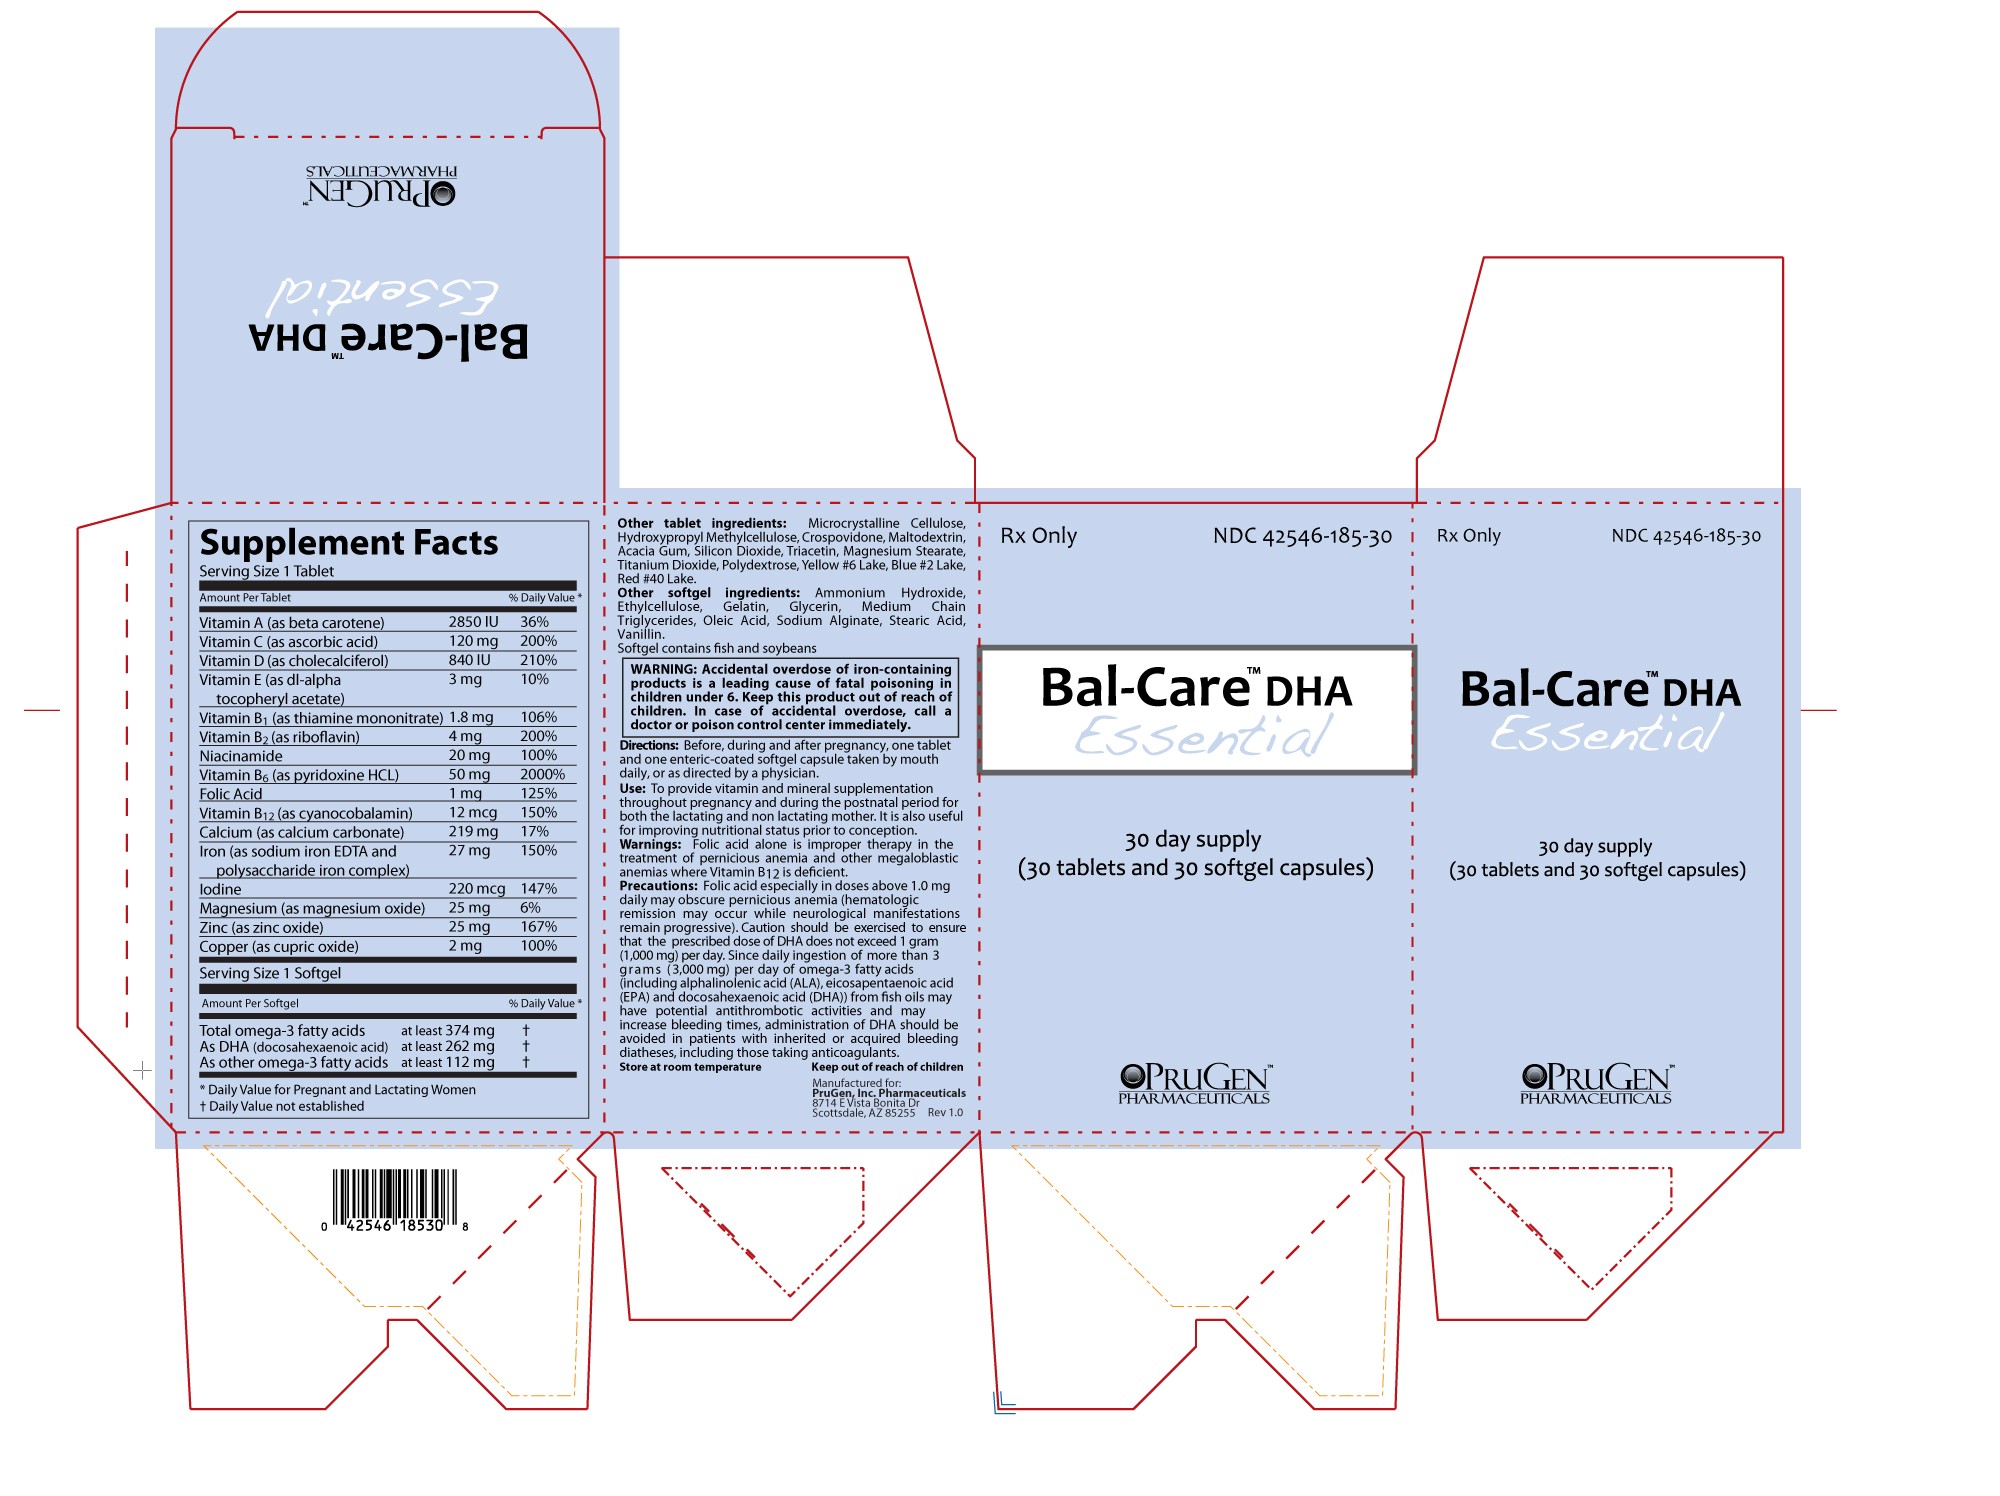 Bal-Care DHA Essential